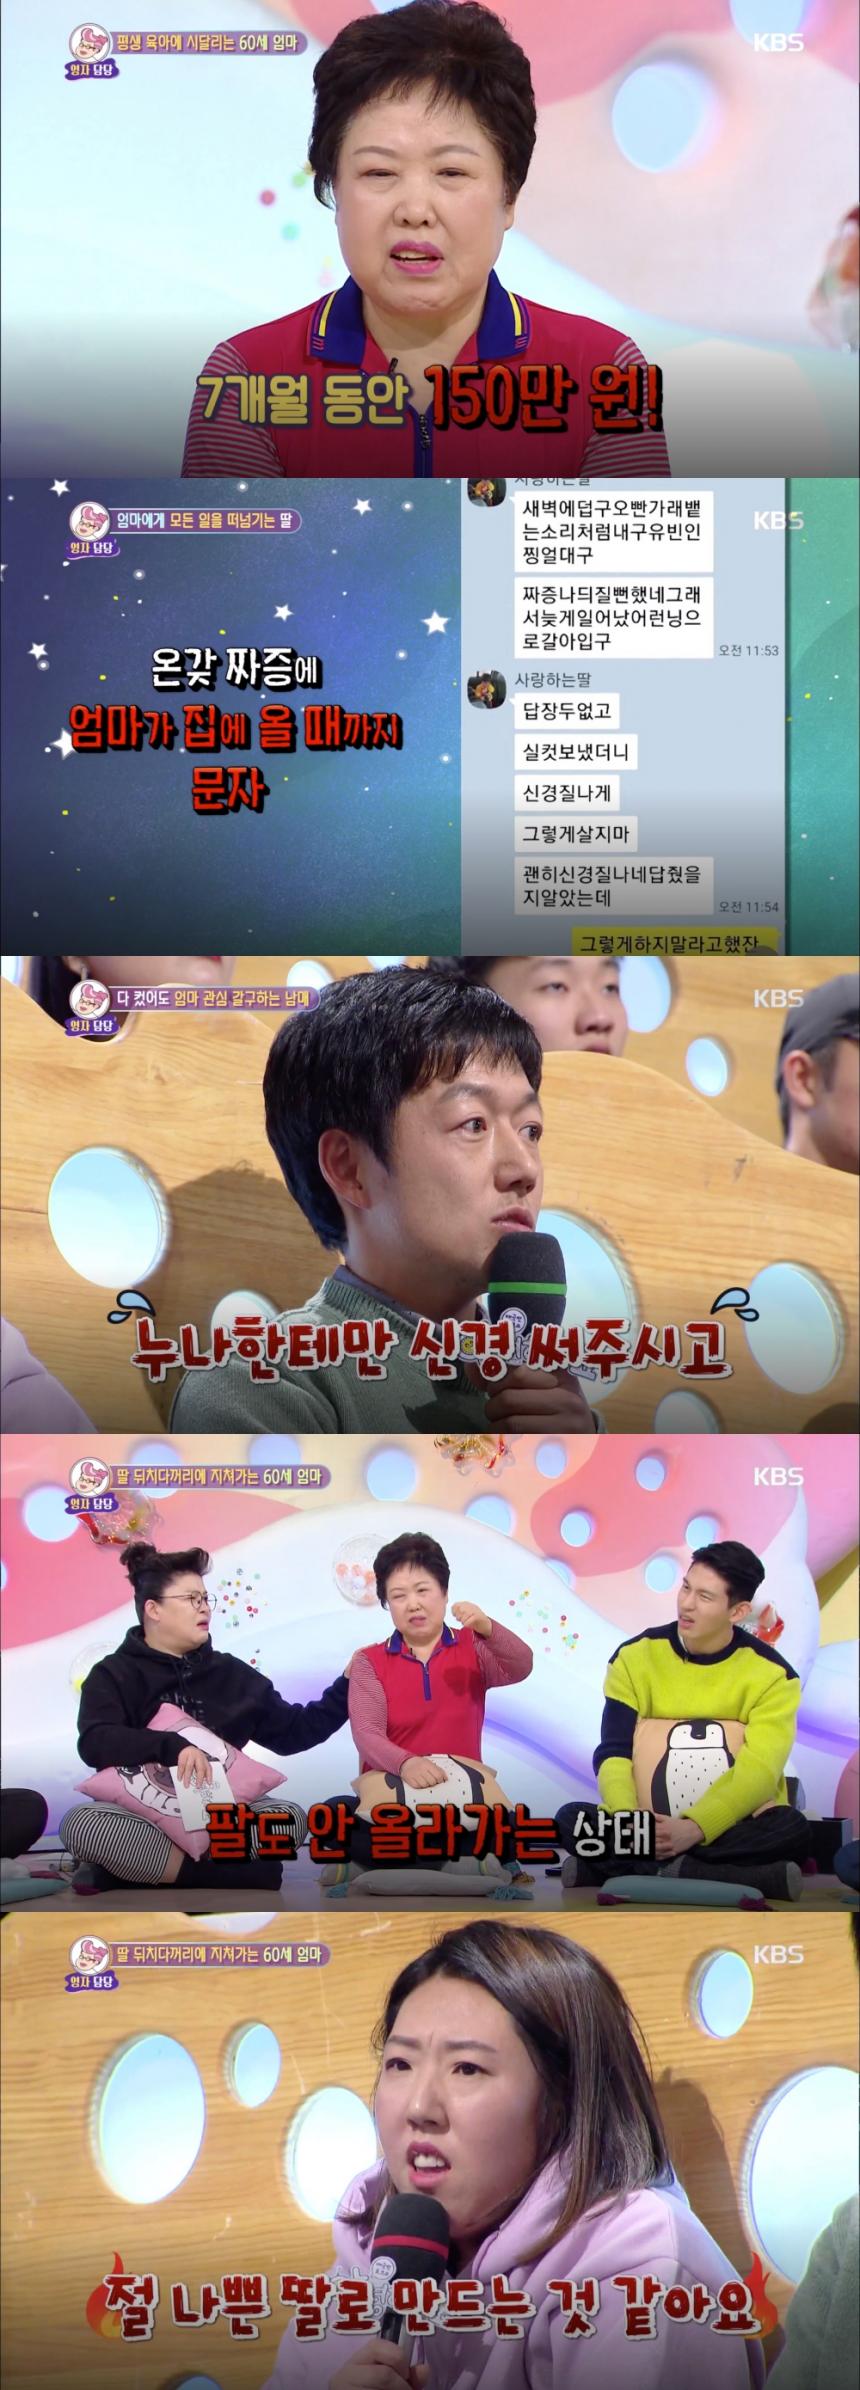 KBS2 ‘대국민 토크쇼 안녕하세요’ 방송 캡처